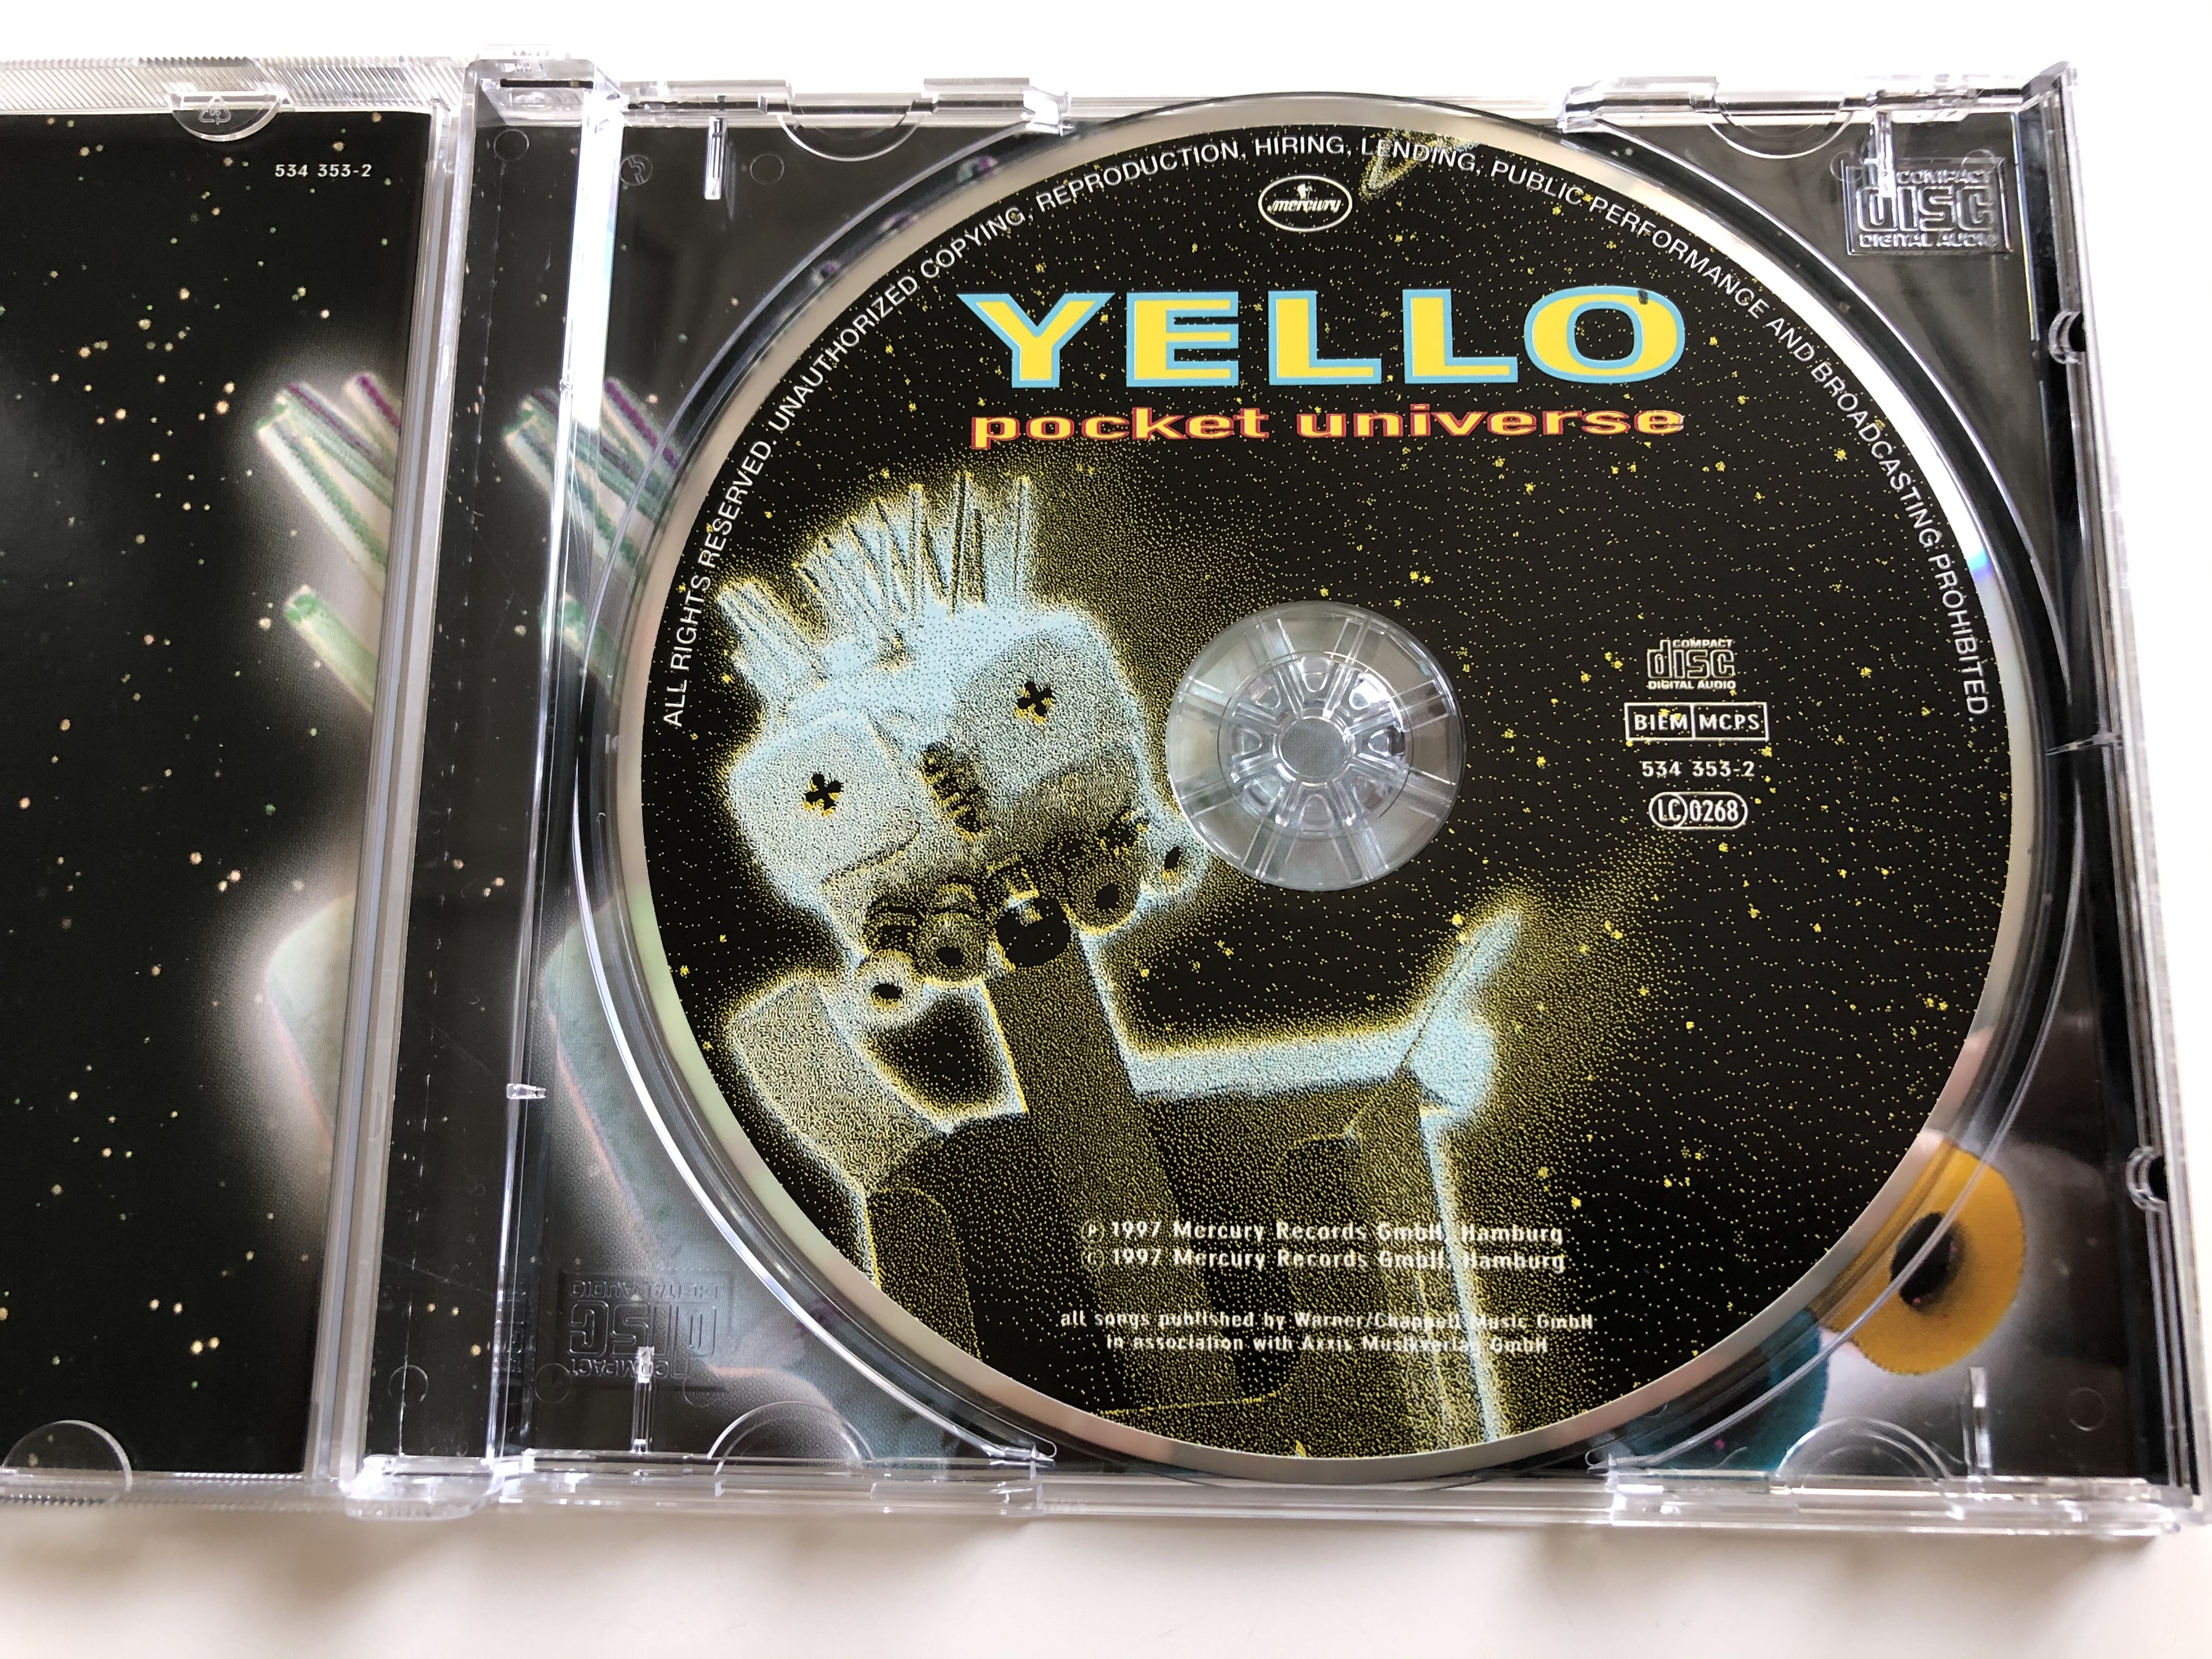 yello-pocket-universe-mercury-audio-cd-1997-534-353-2-4-.jpg